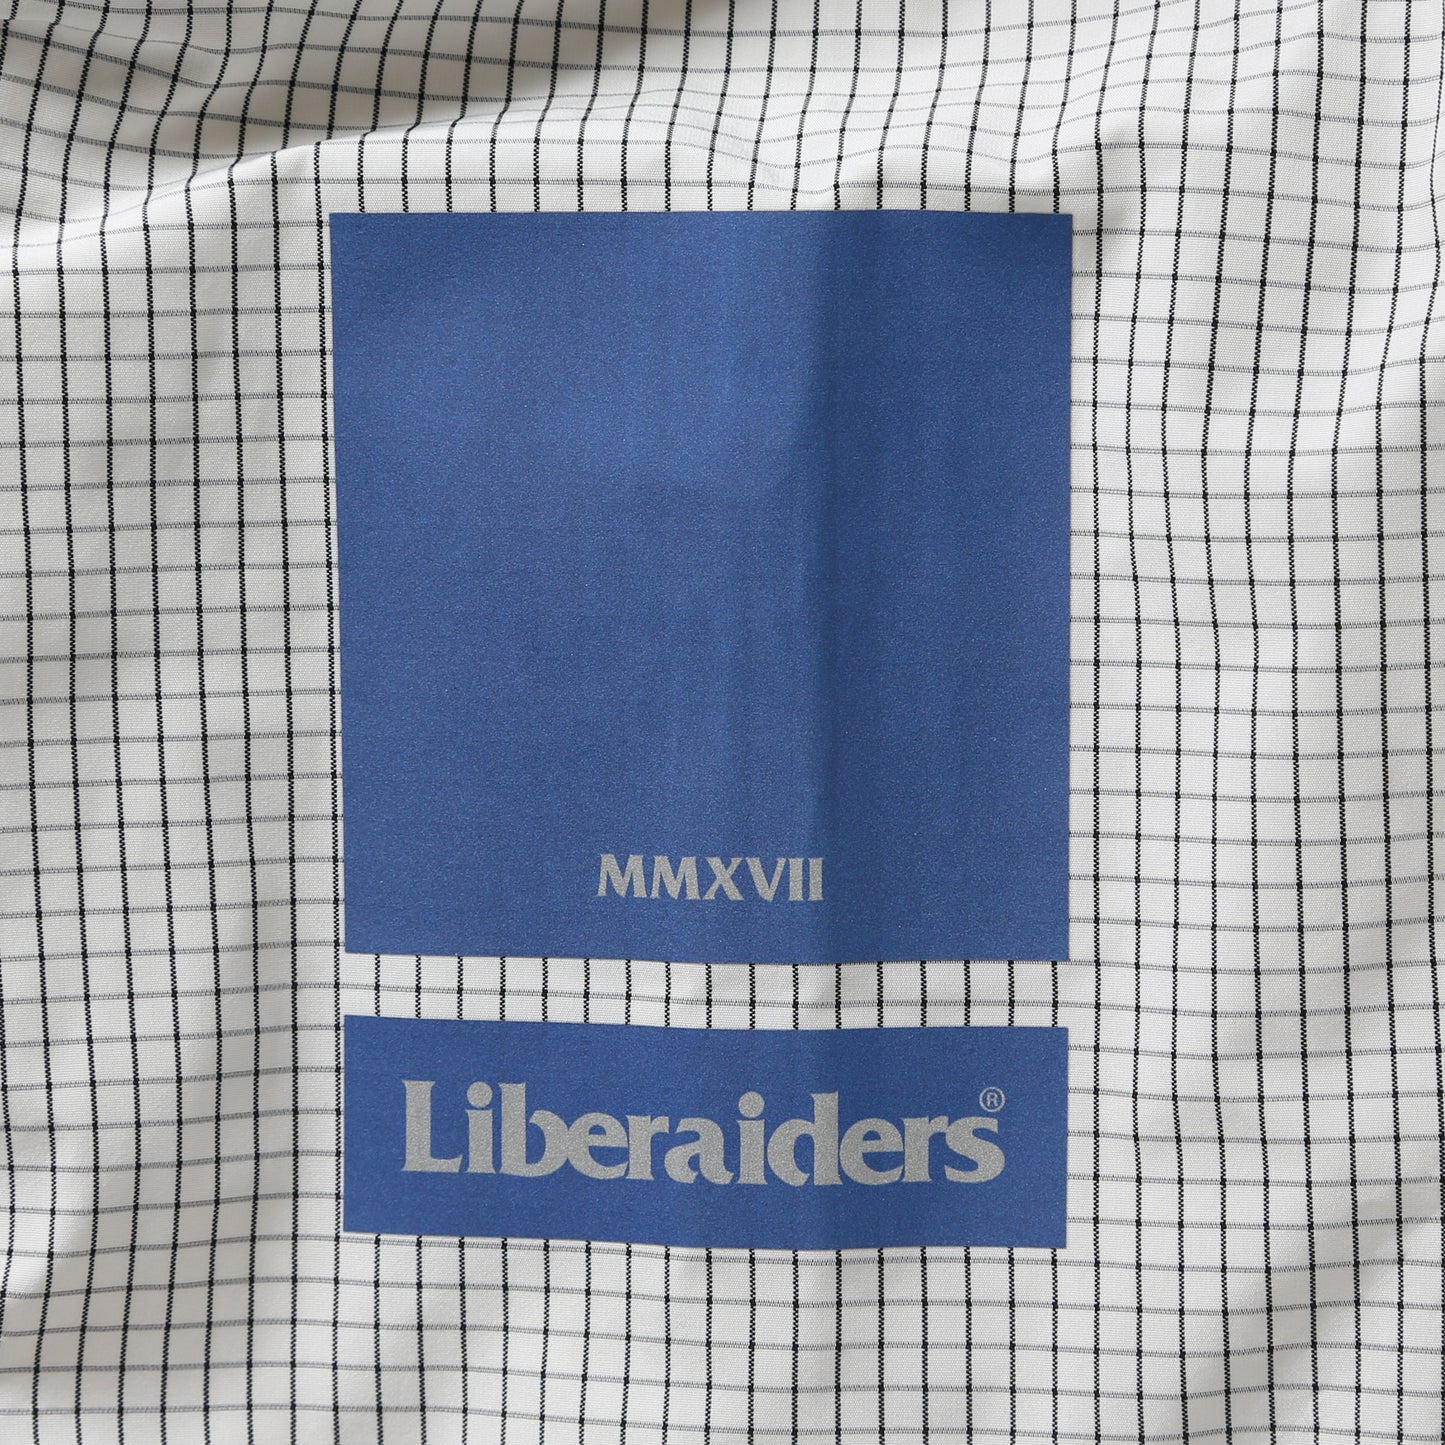 Liberaiders 23 (リベレイダース) / GRID CLOTH PARKA 70001